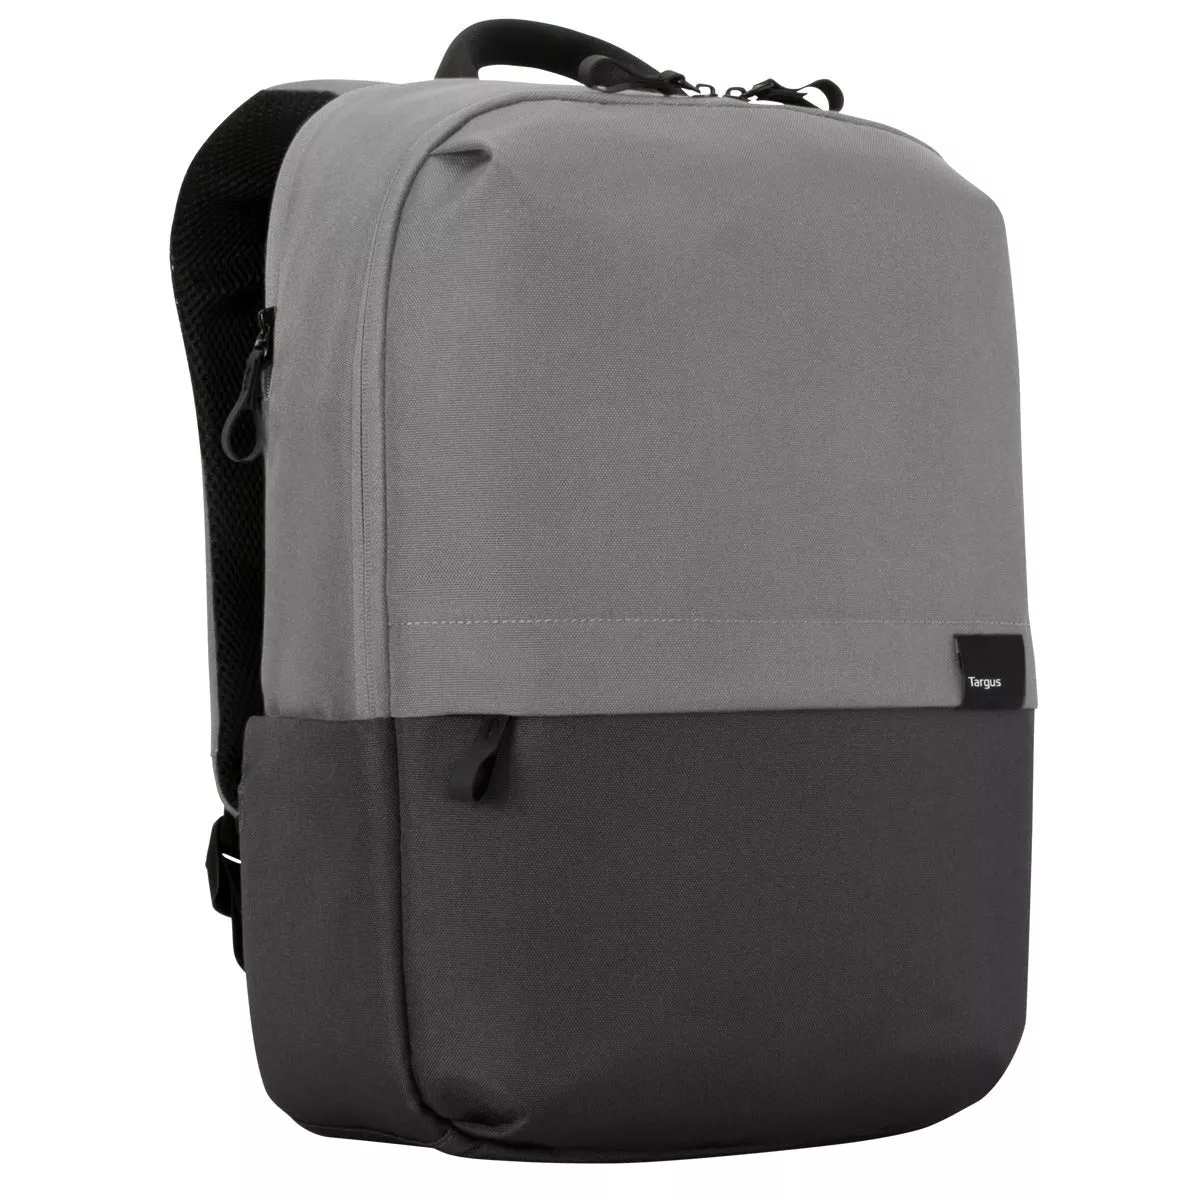 Achat TARGUS 15.6p Sagano Commuter Backpack Grey au meilleur prix